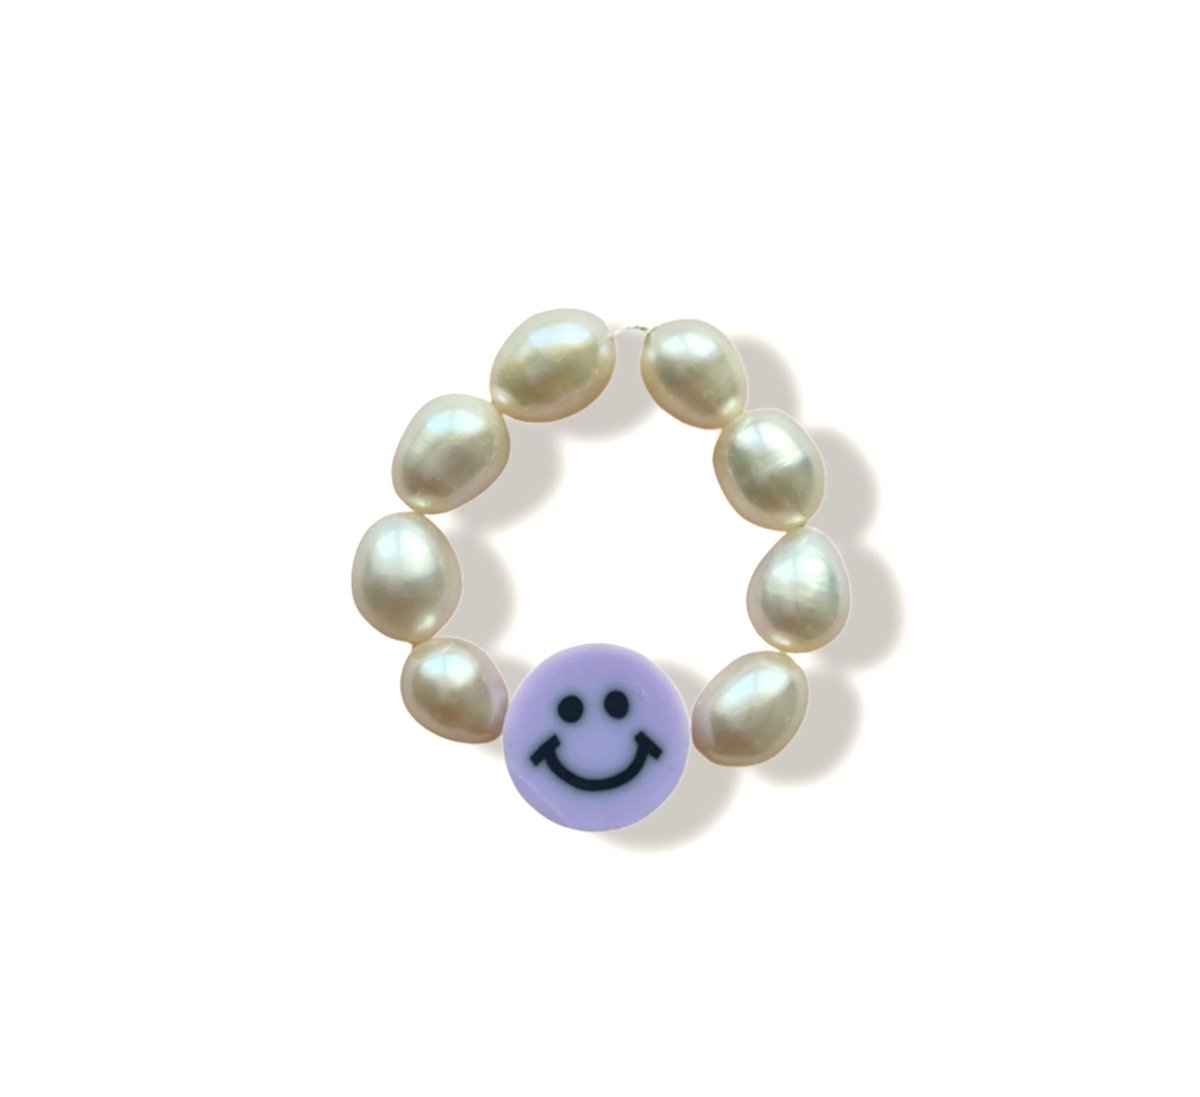 Bukuri jewelry - Smiley freshwater pearl ring - zoetwaterparel ring. Maat 16